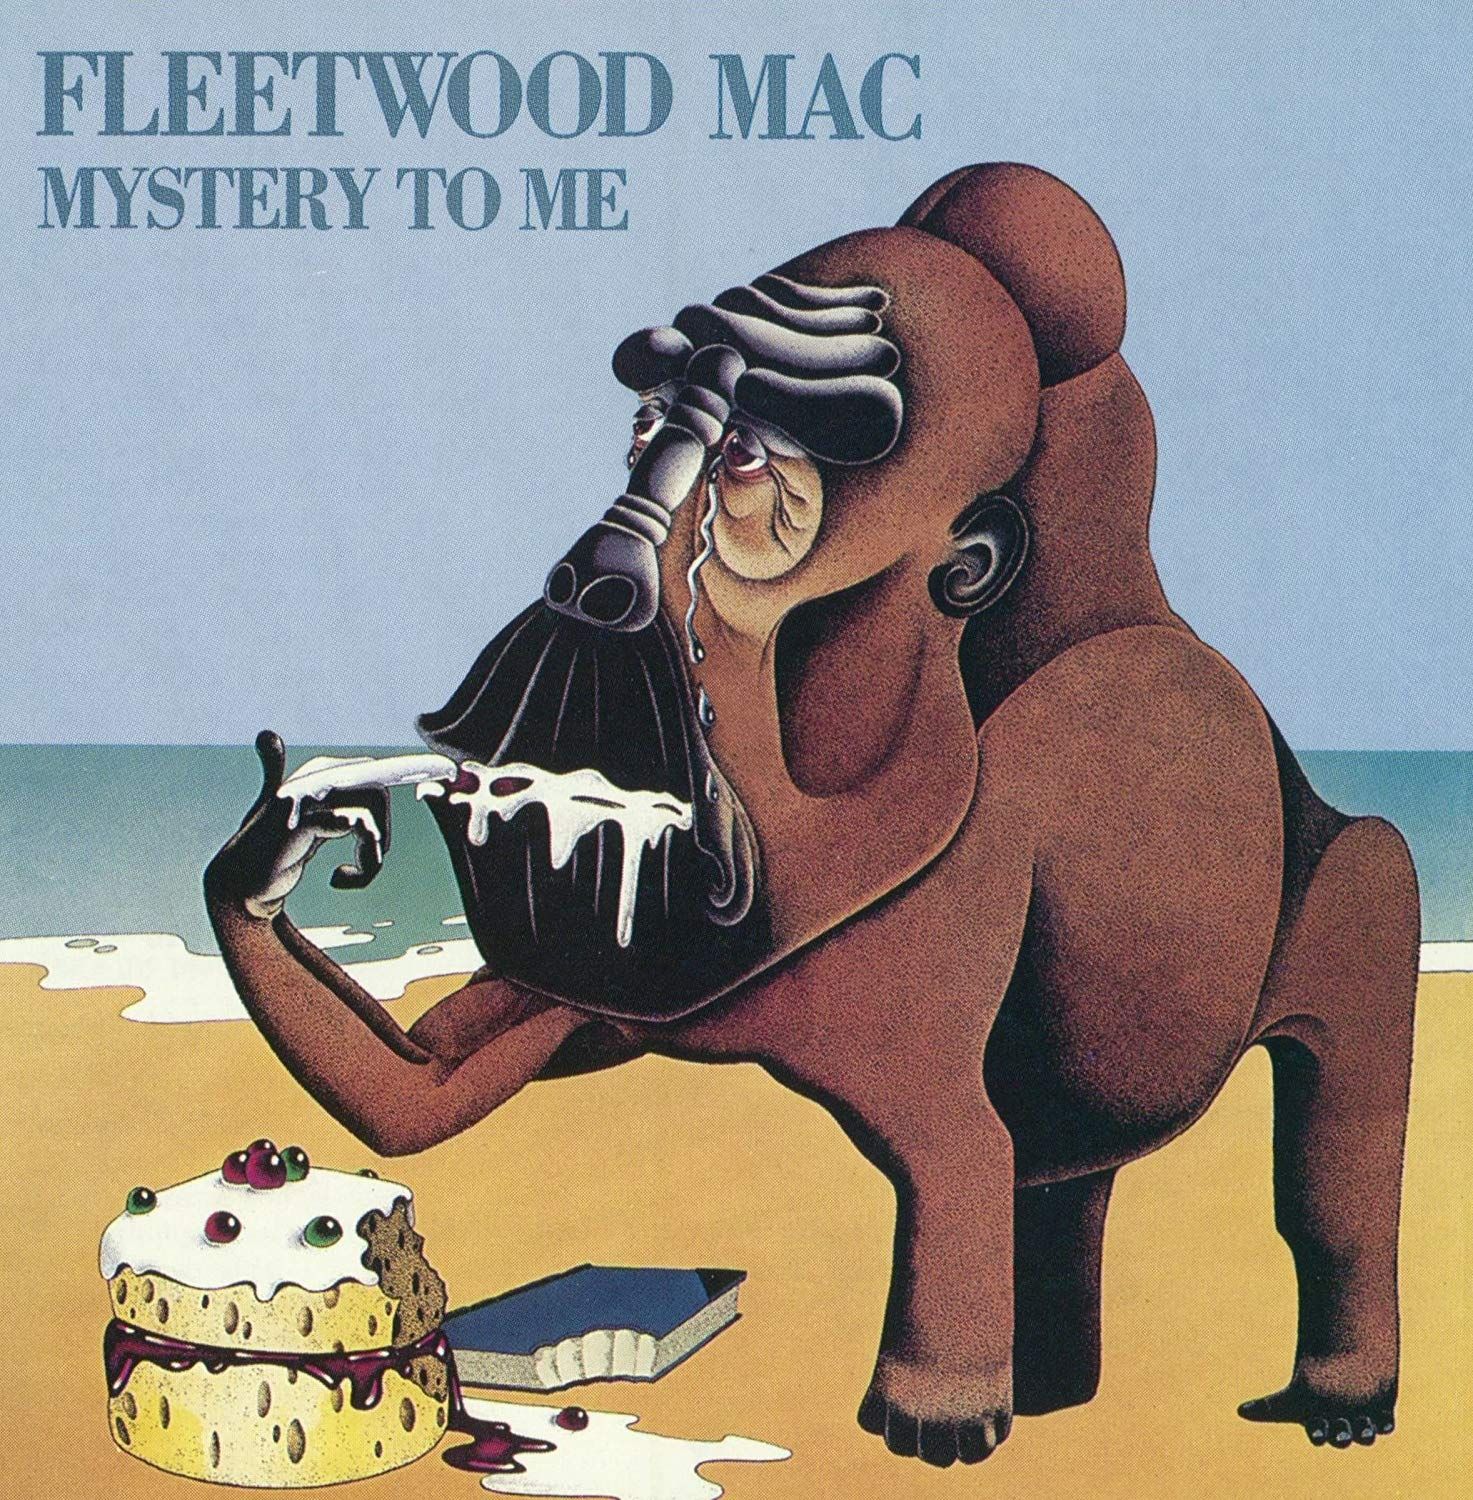 Fleetwood Mac - Everywhere (Tradução/Legendado) 